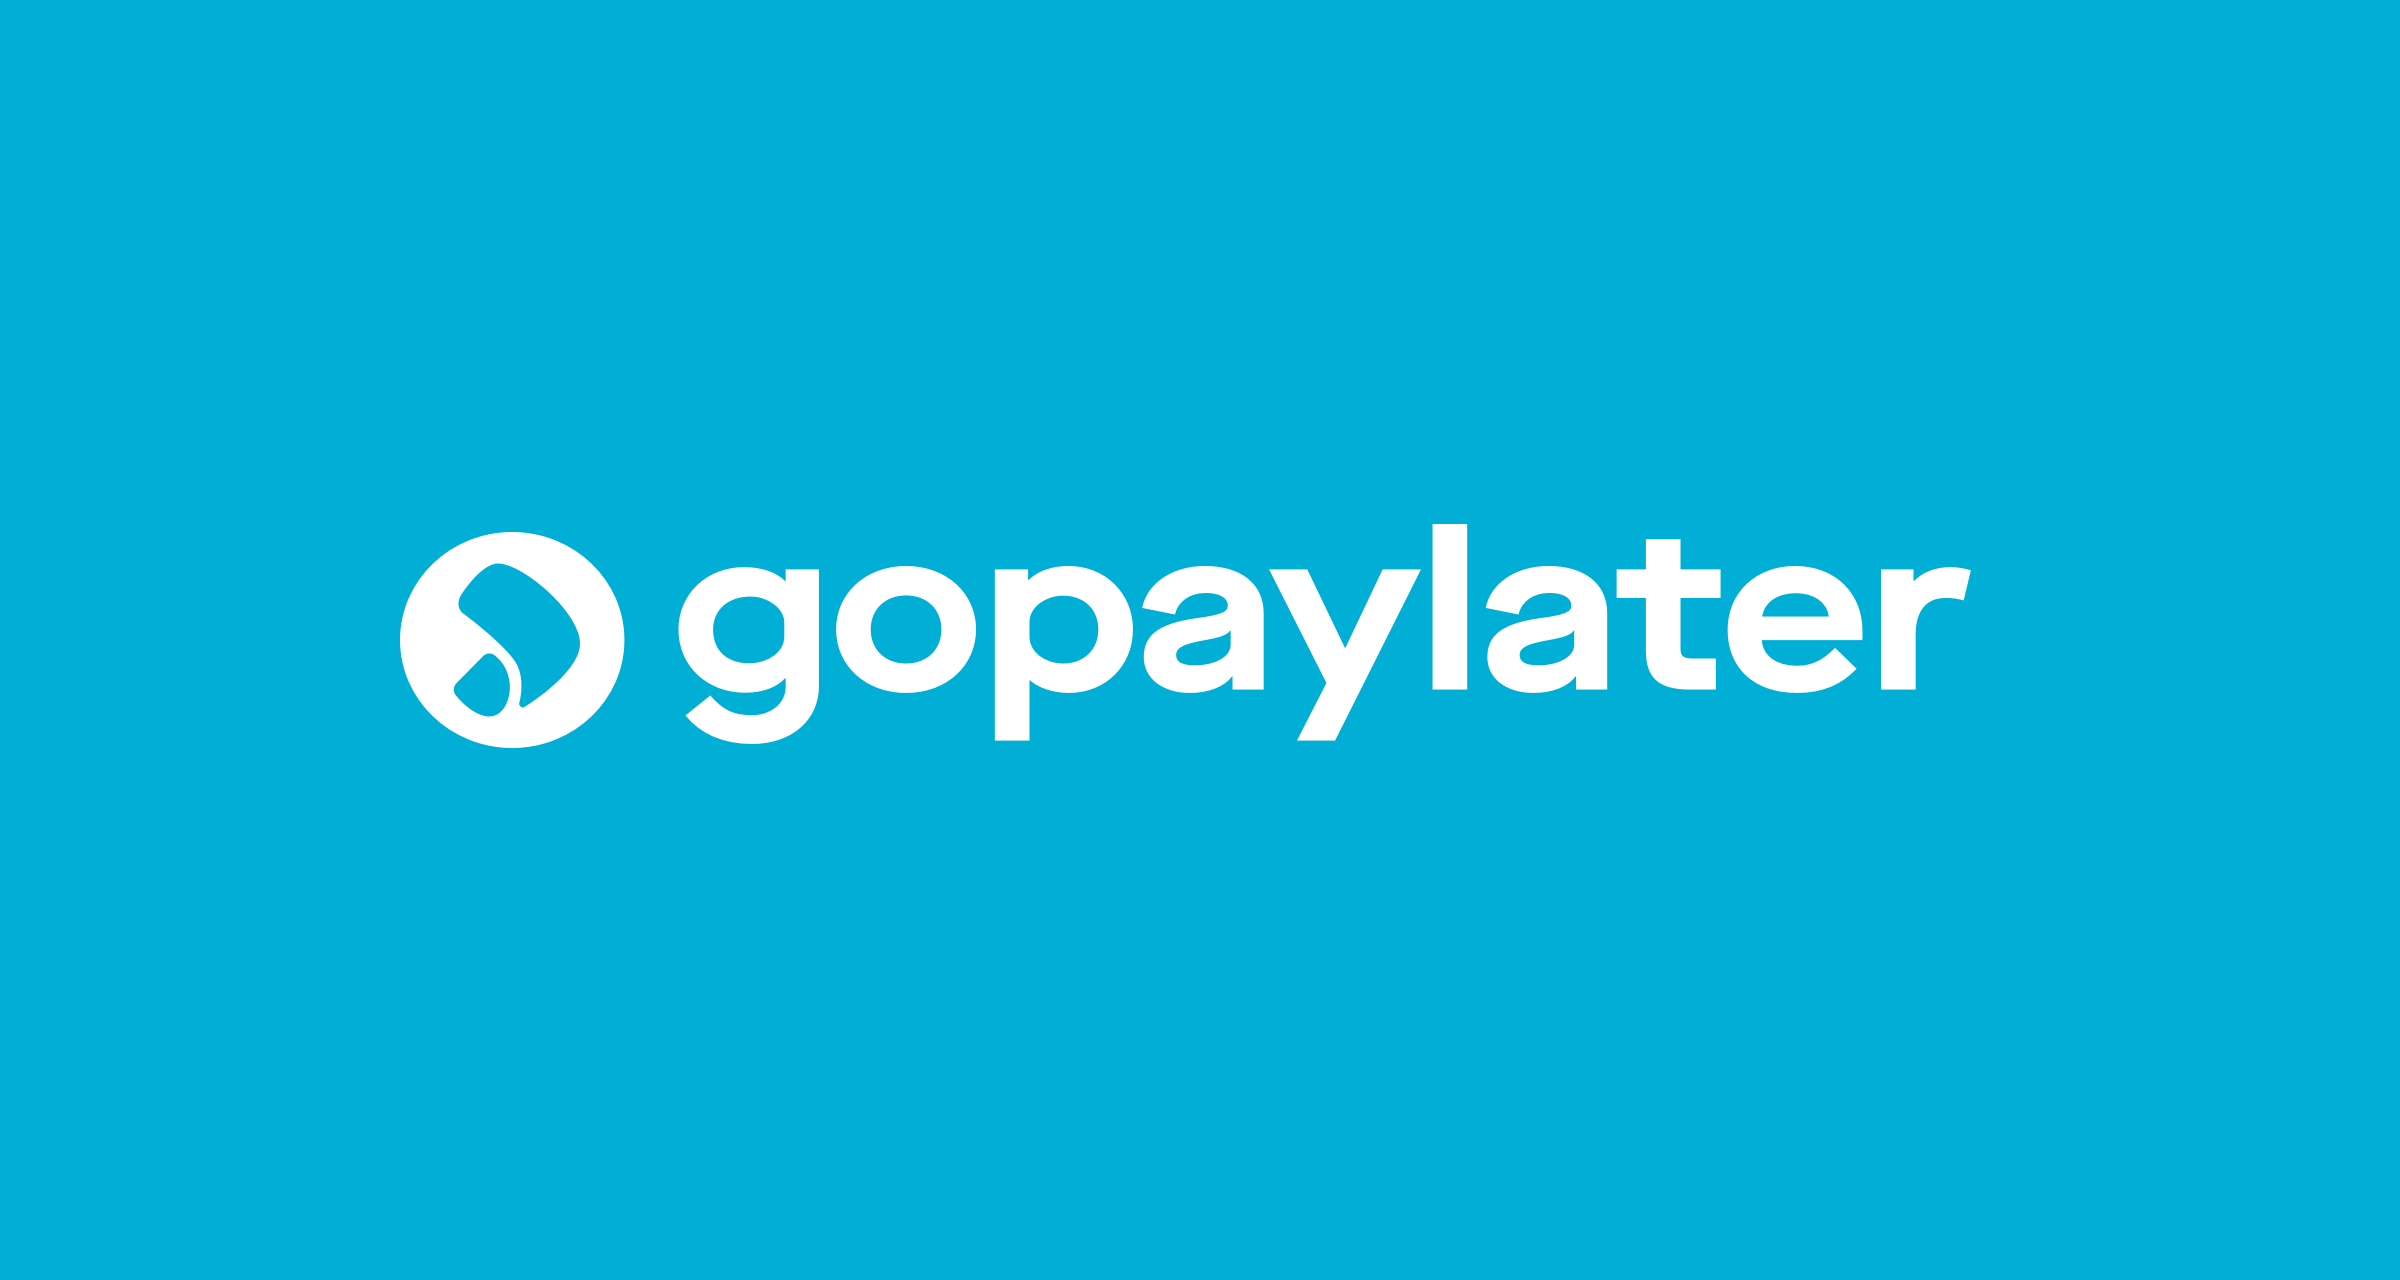 Gojek Punya PayLater, Cek Cara Aktivasinya Sekarang dan Dapatkan Pinjaman Online hingga Rp30 Juta